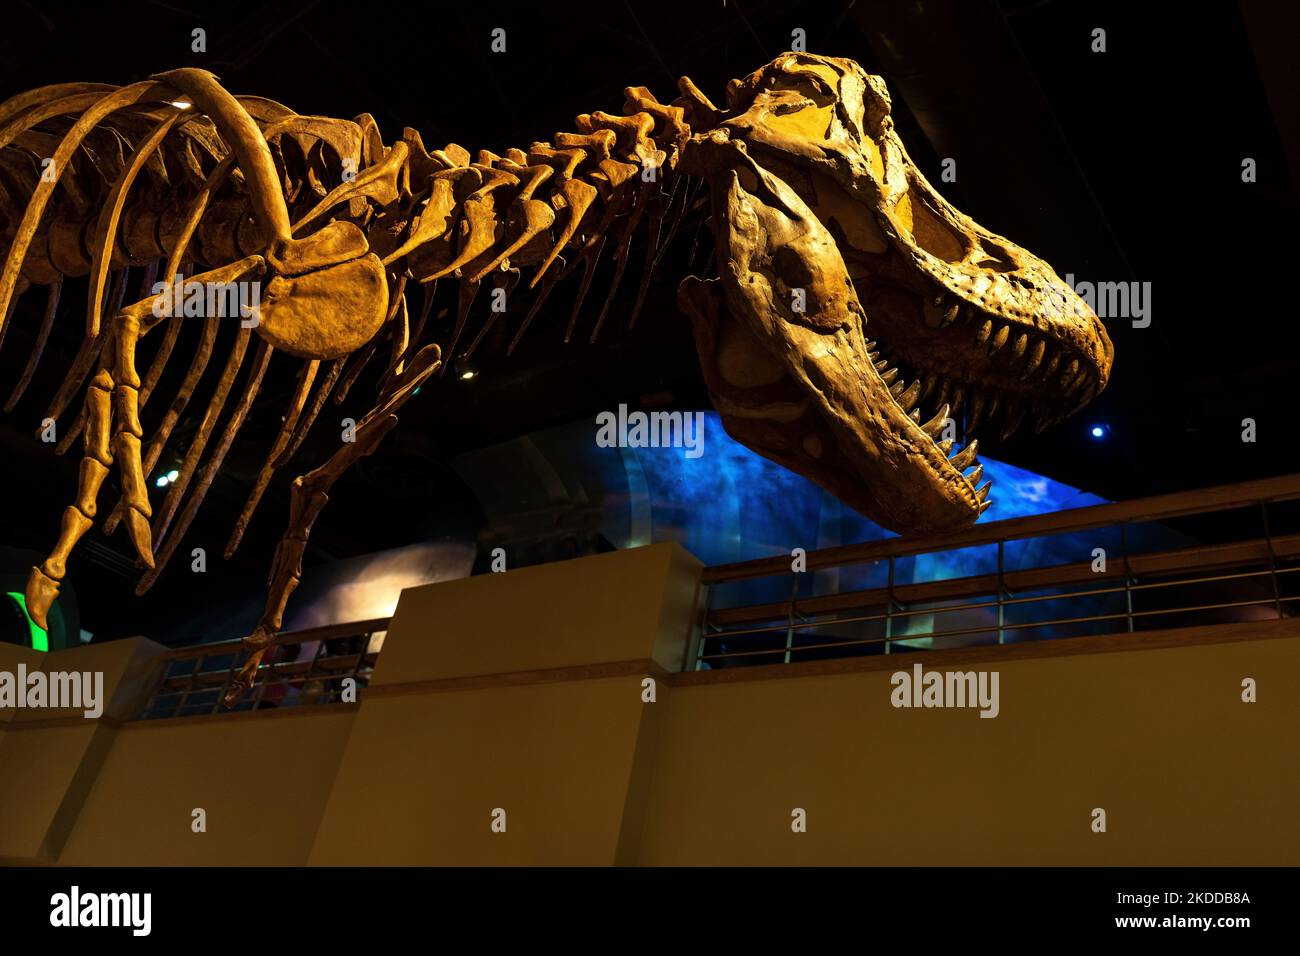 Tyrannosaurus Rex dinosaur Skeleton, Royal Tyrrell Museum, Drumheller, Alberta, Canada. Stock Photo